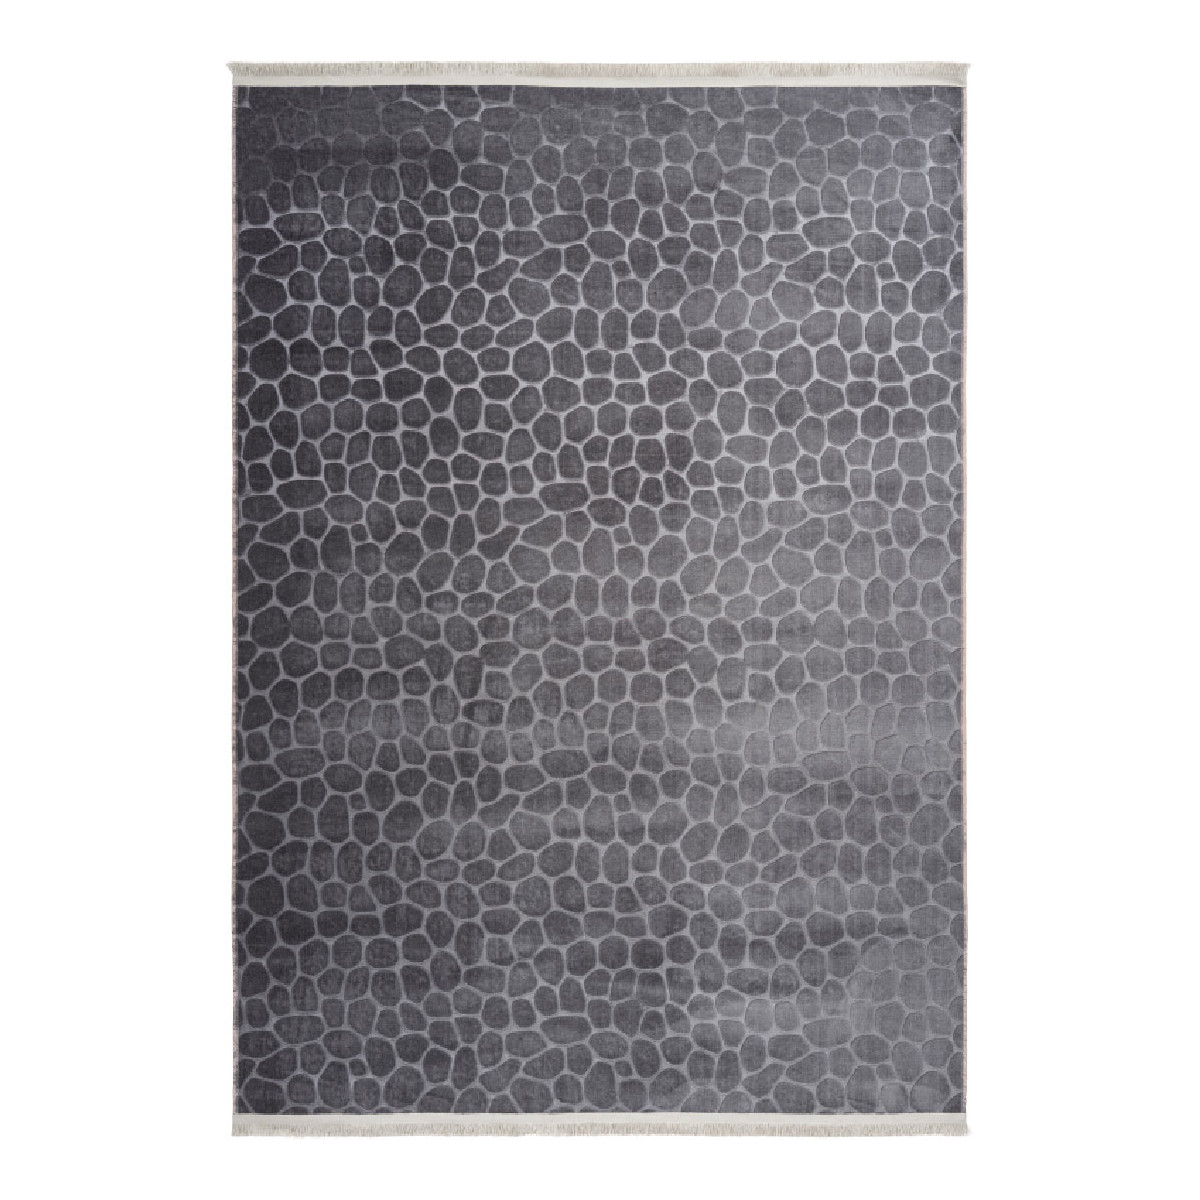 Tapis  contemporaine en polyester graphite 80x140